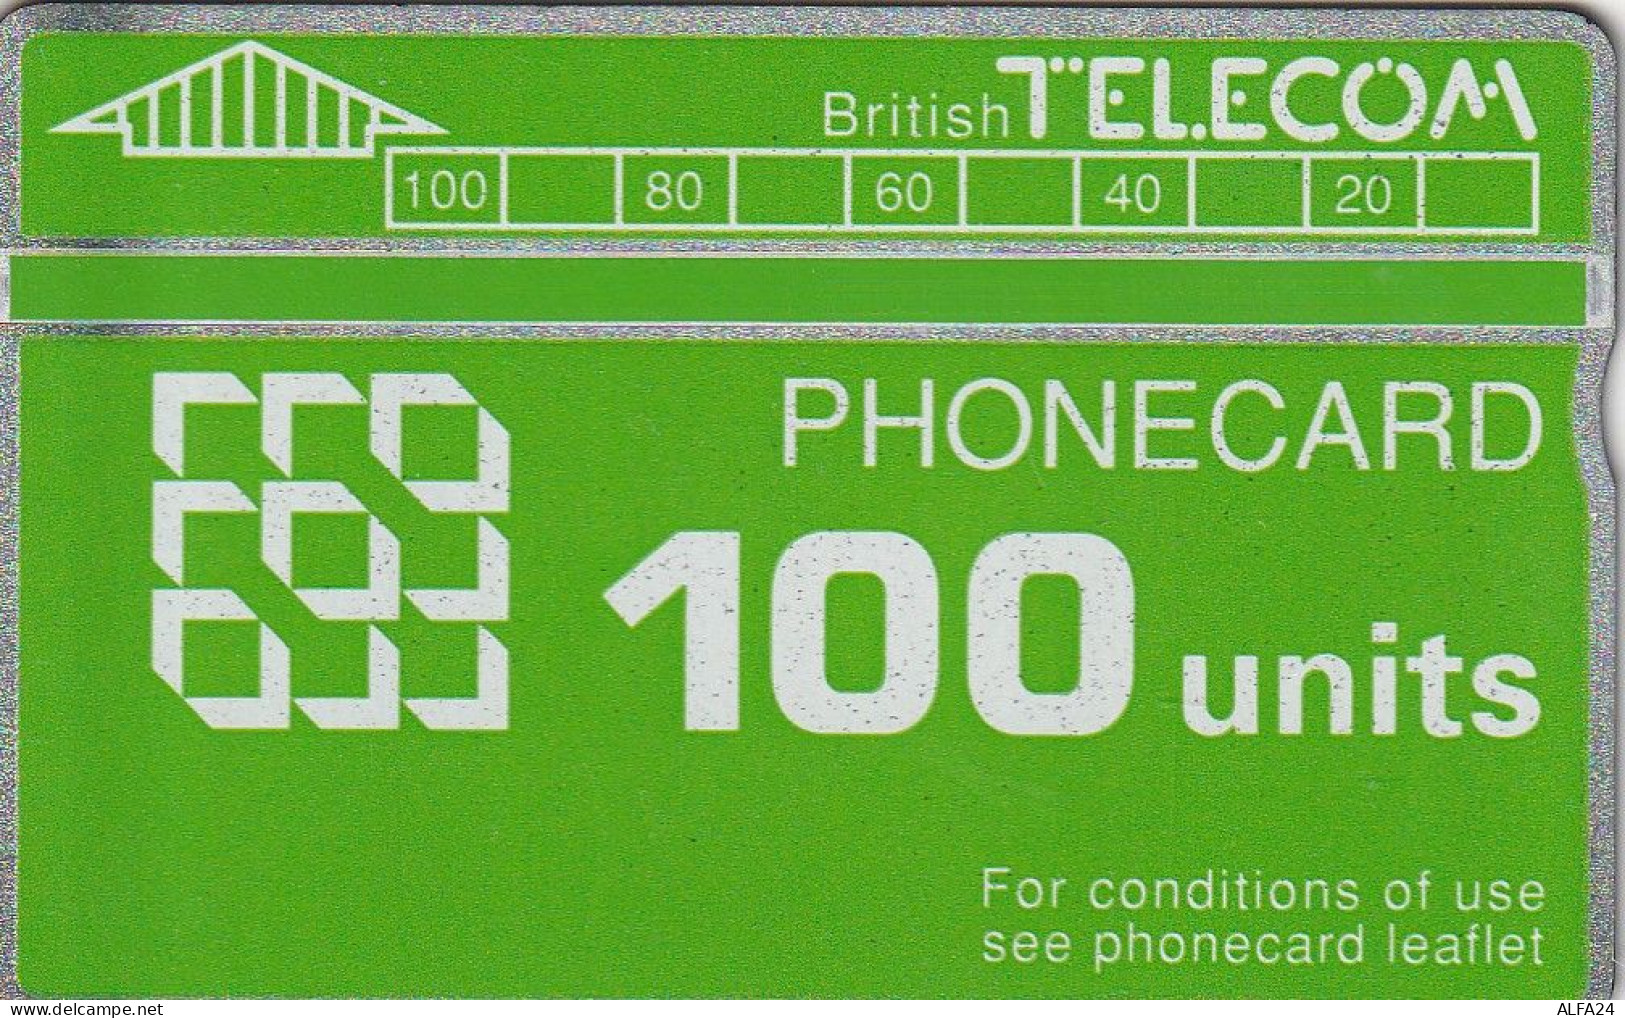 PHONE CARD UK LG (CZ1725 - BT Edición General